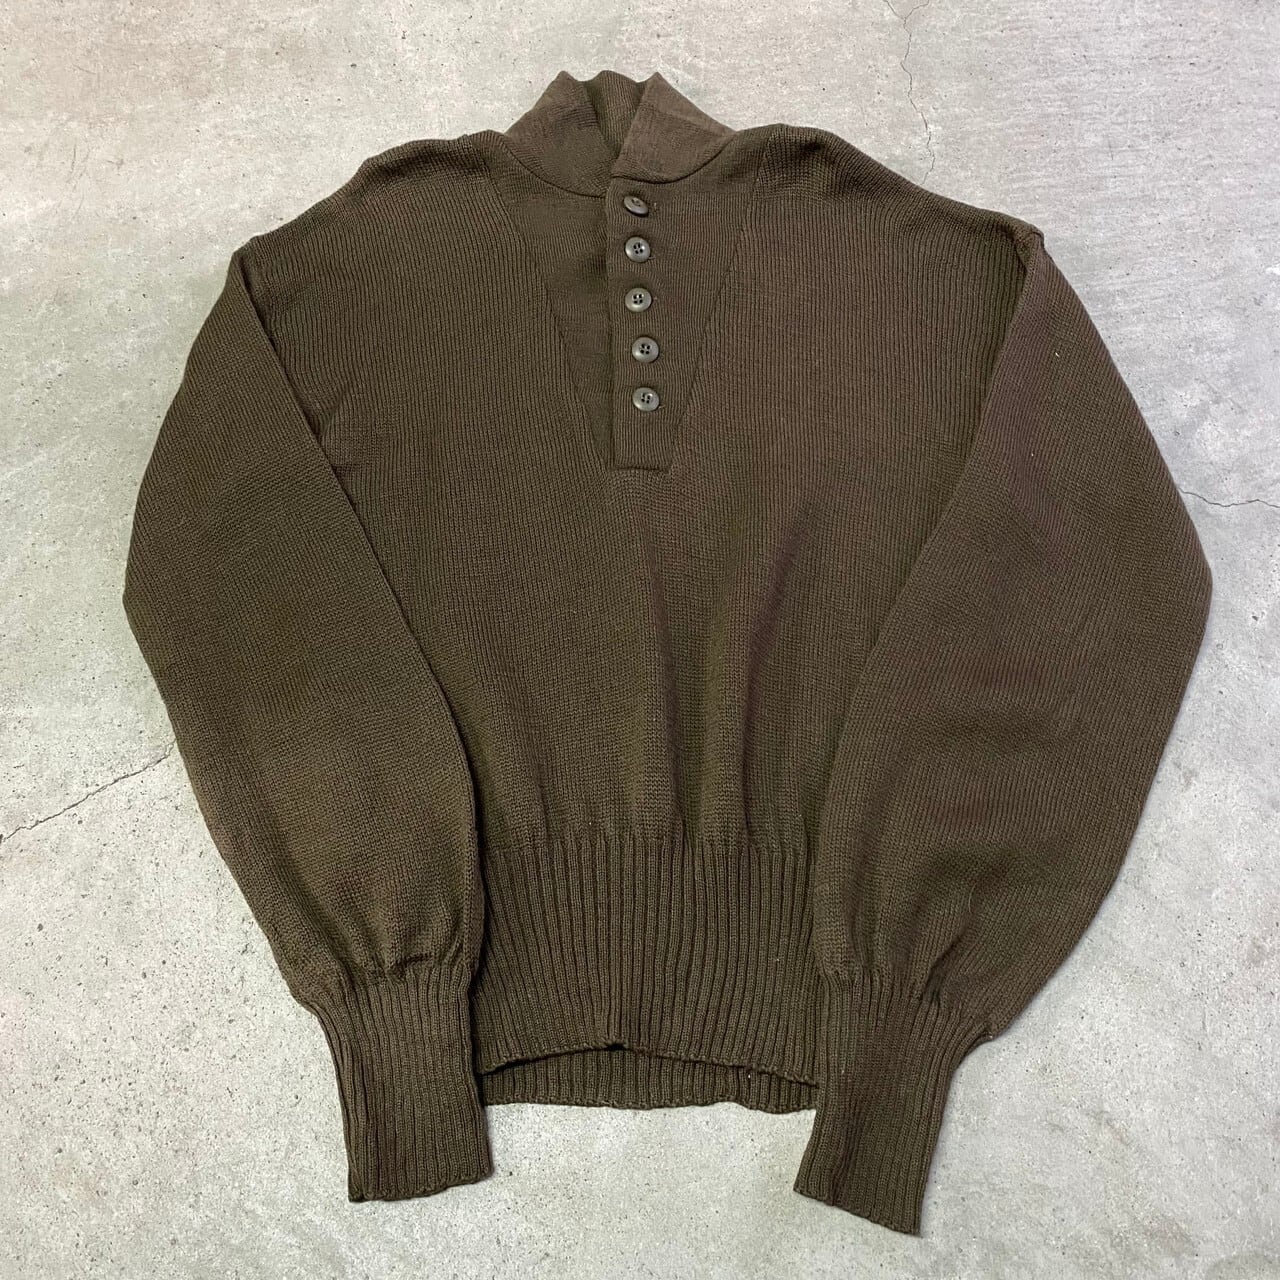 【Vintage】80s usarmy 米軍 ヘンリーネック ニット セーター